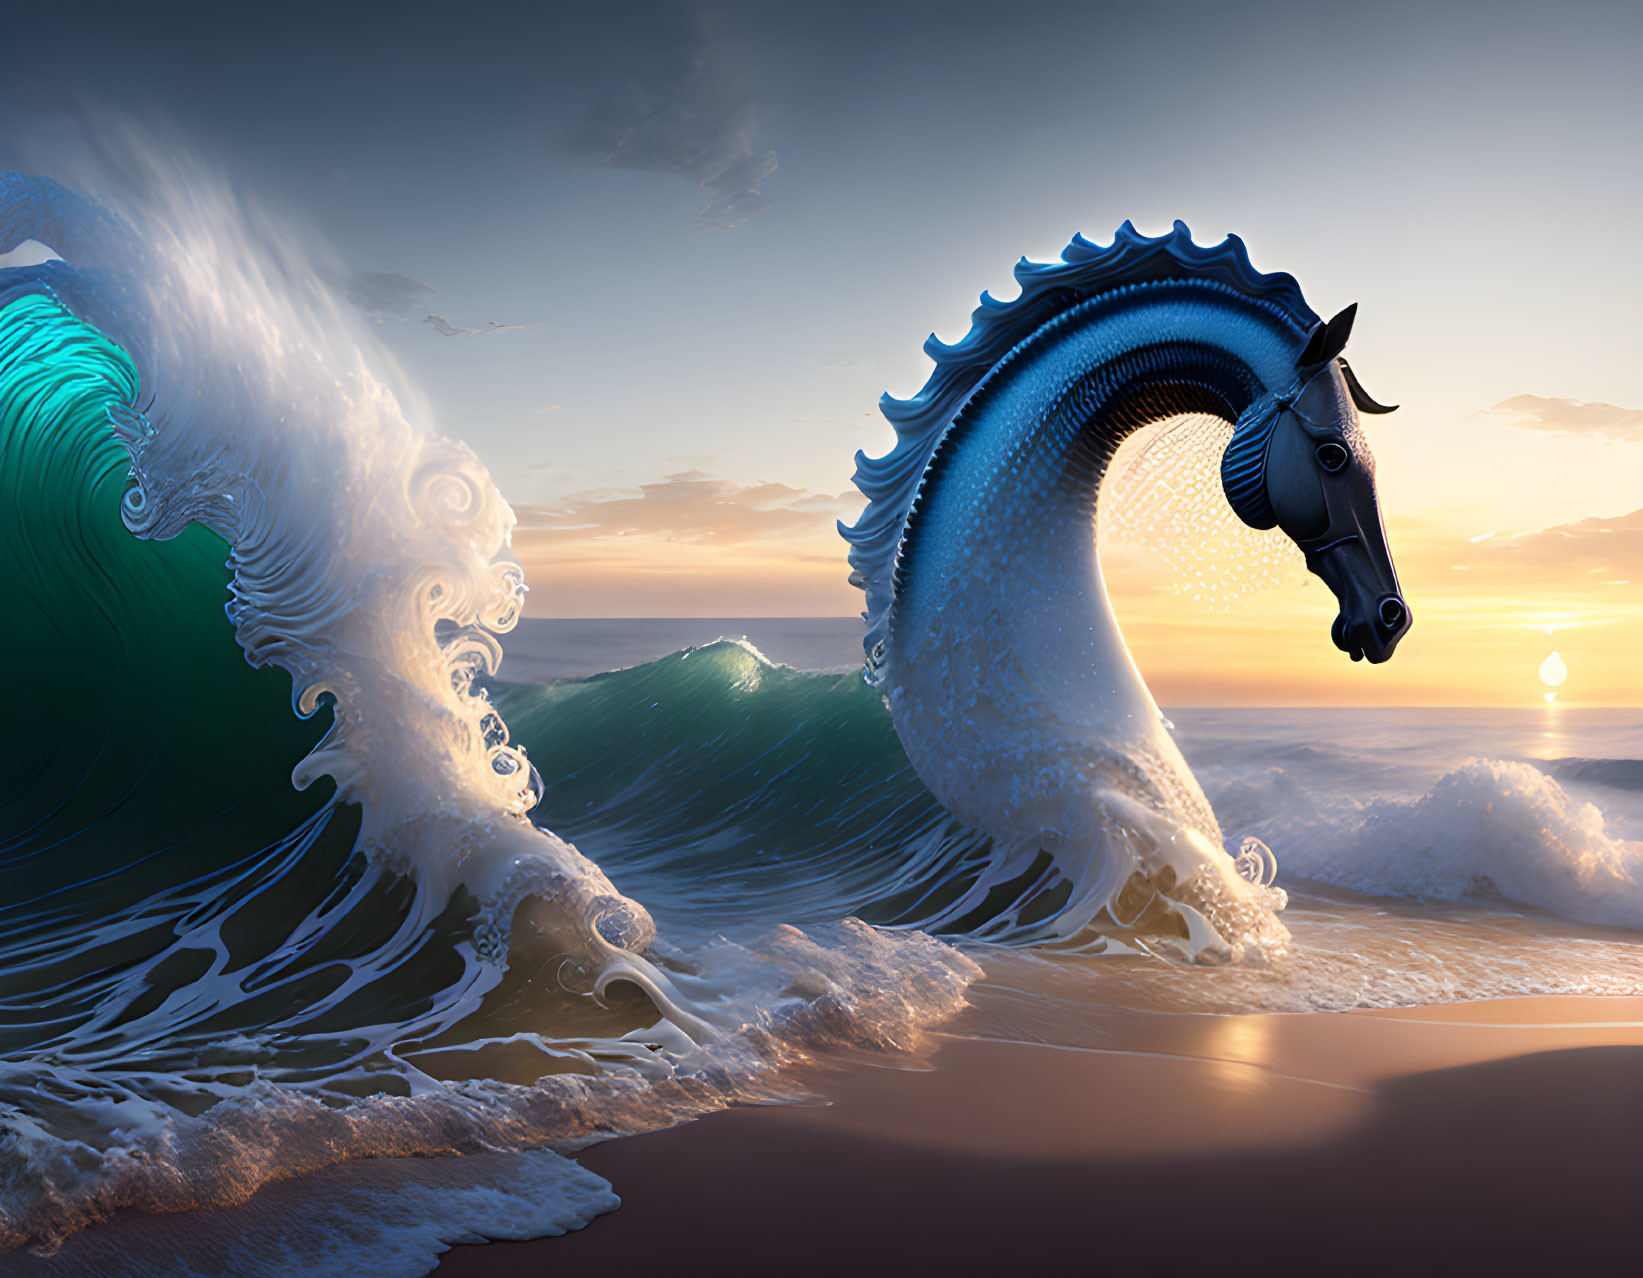 Ocean wave shaped like a horse on sunset beach